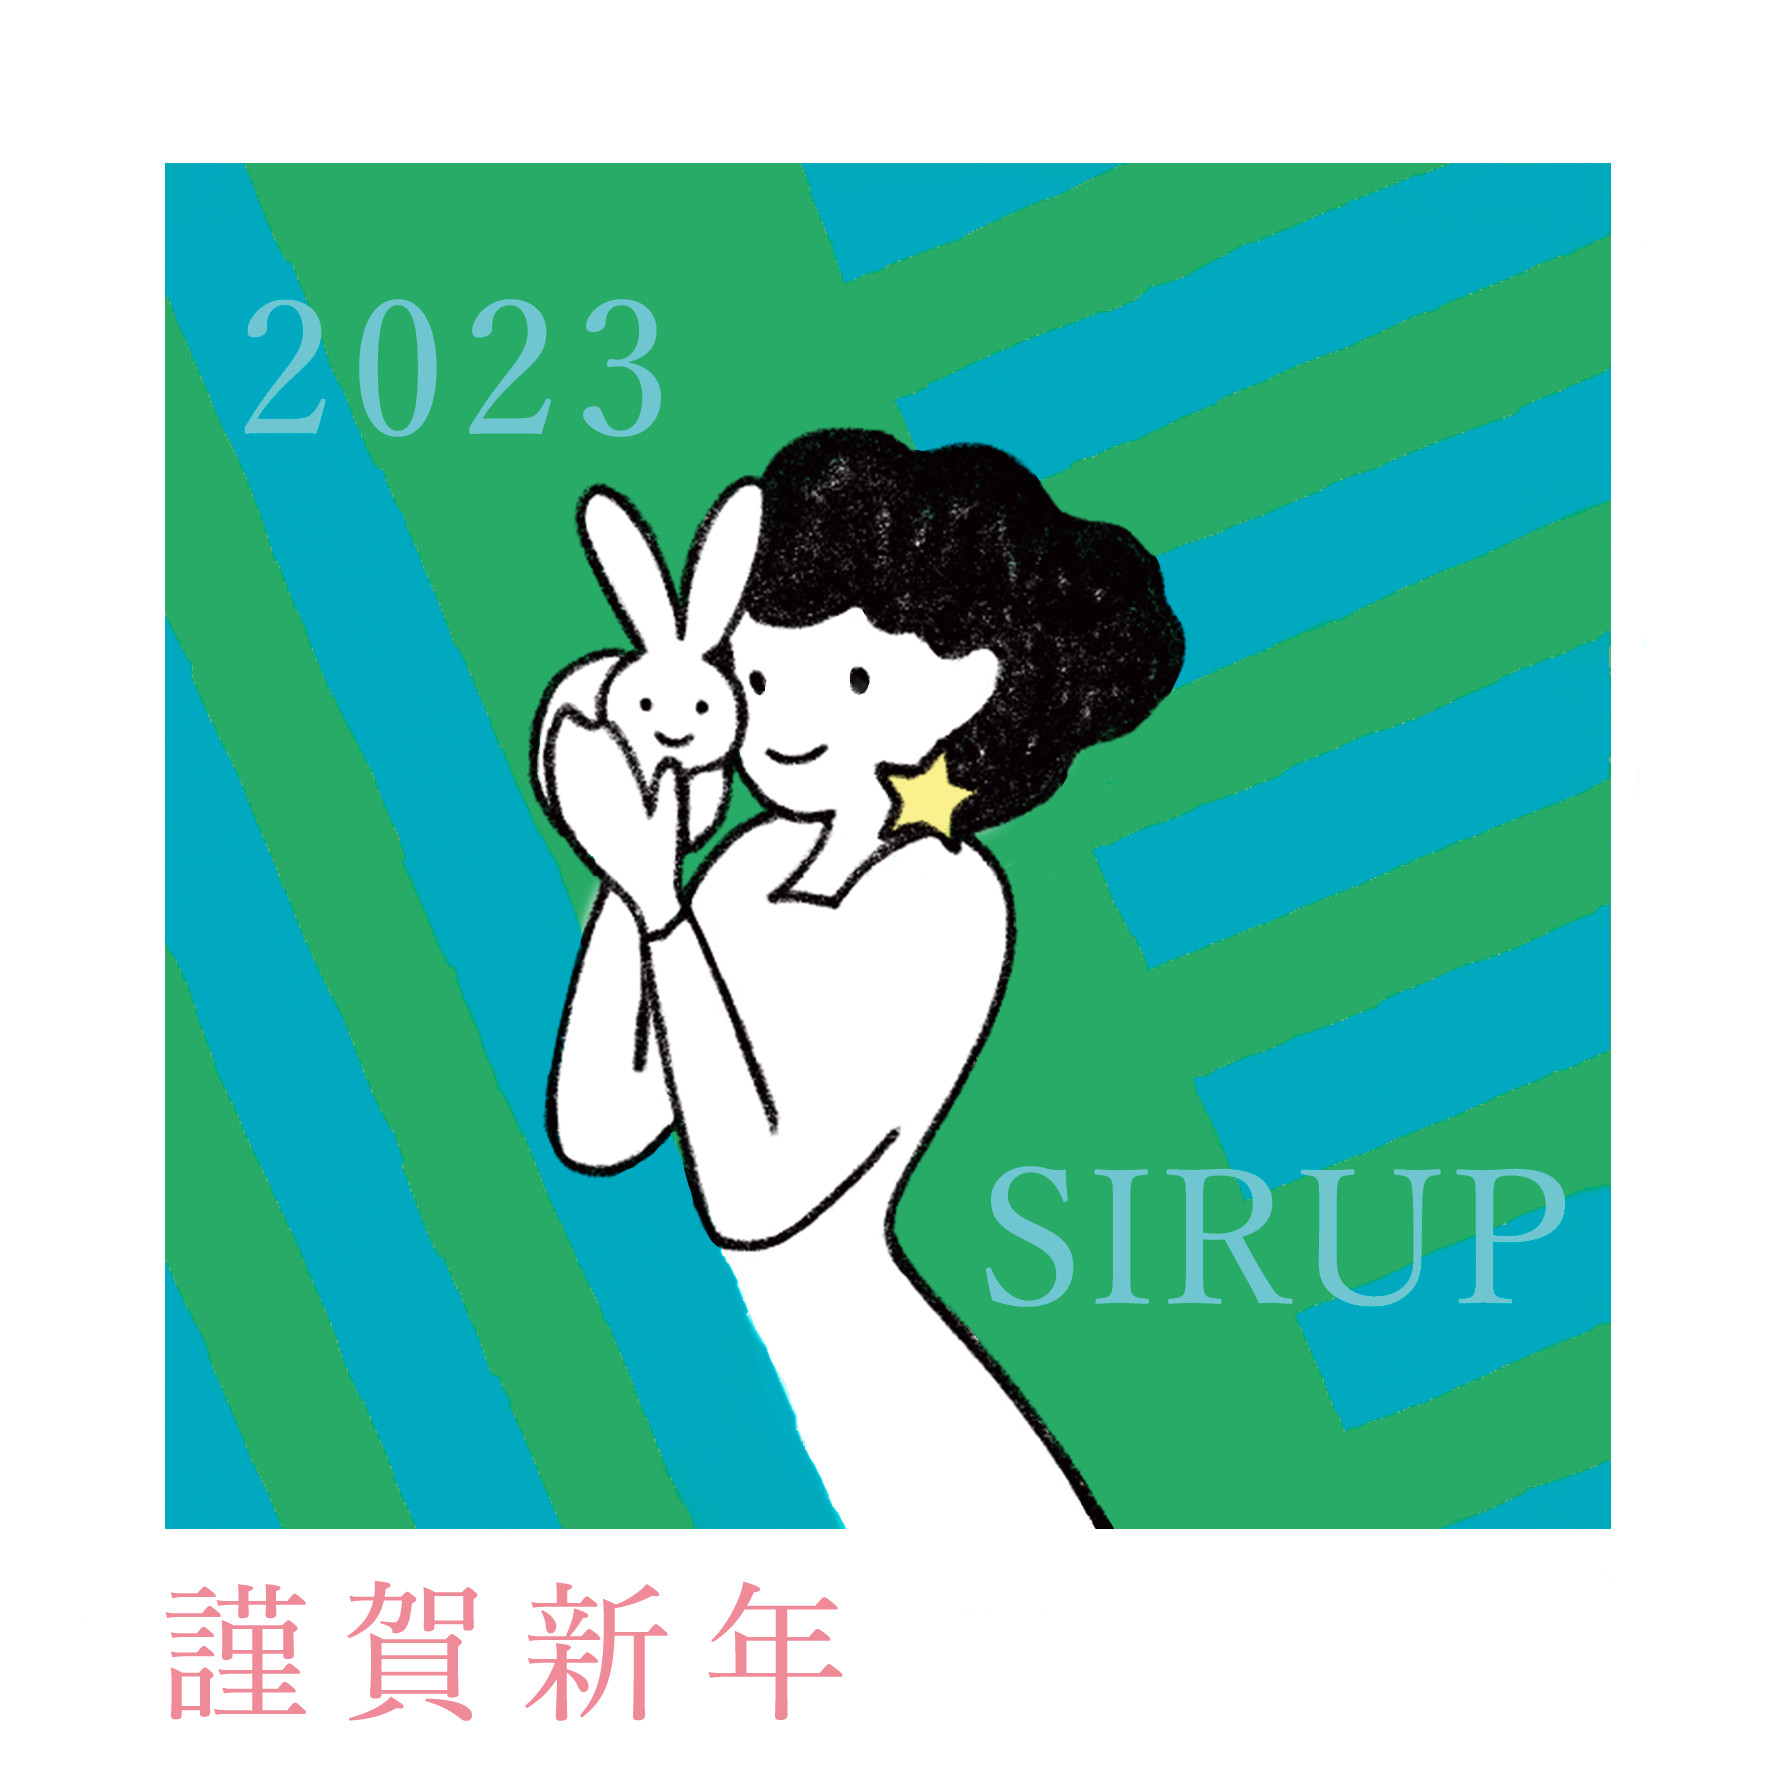 2023 SIRUP